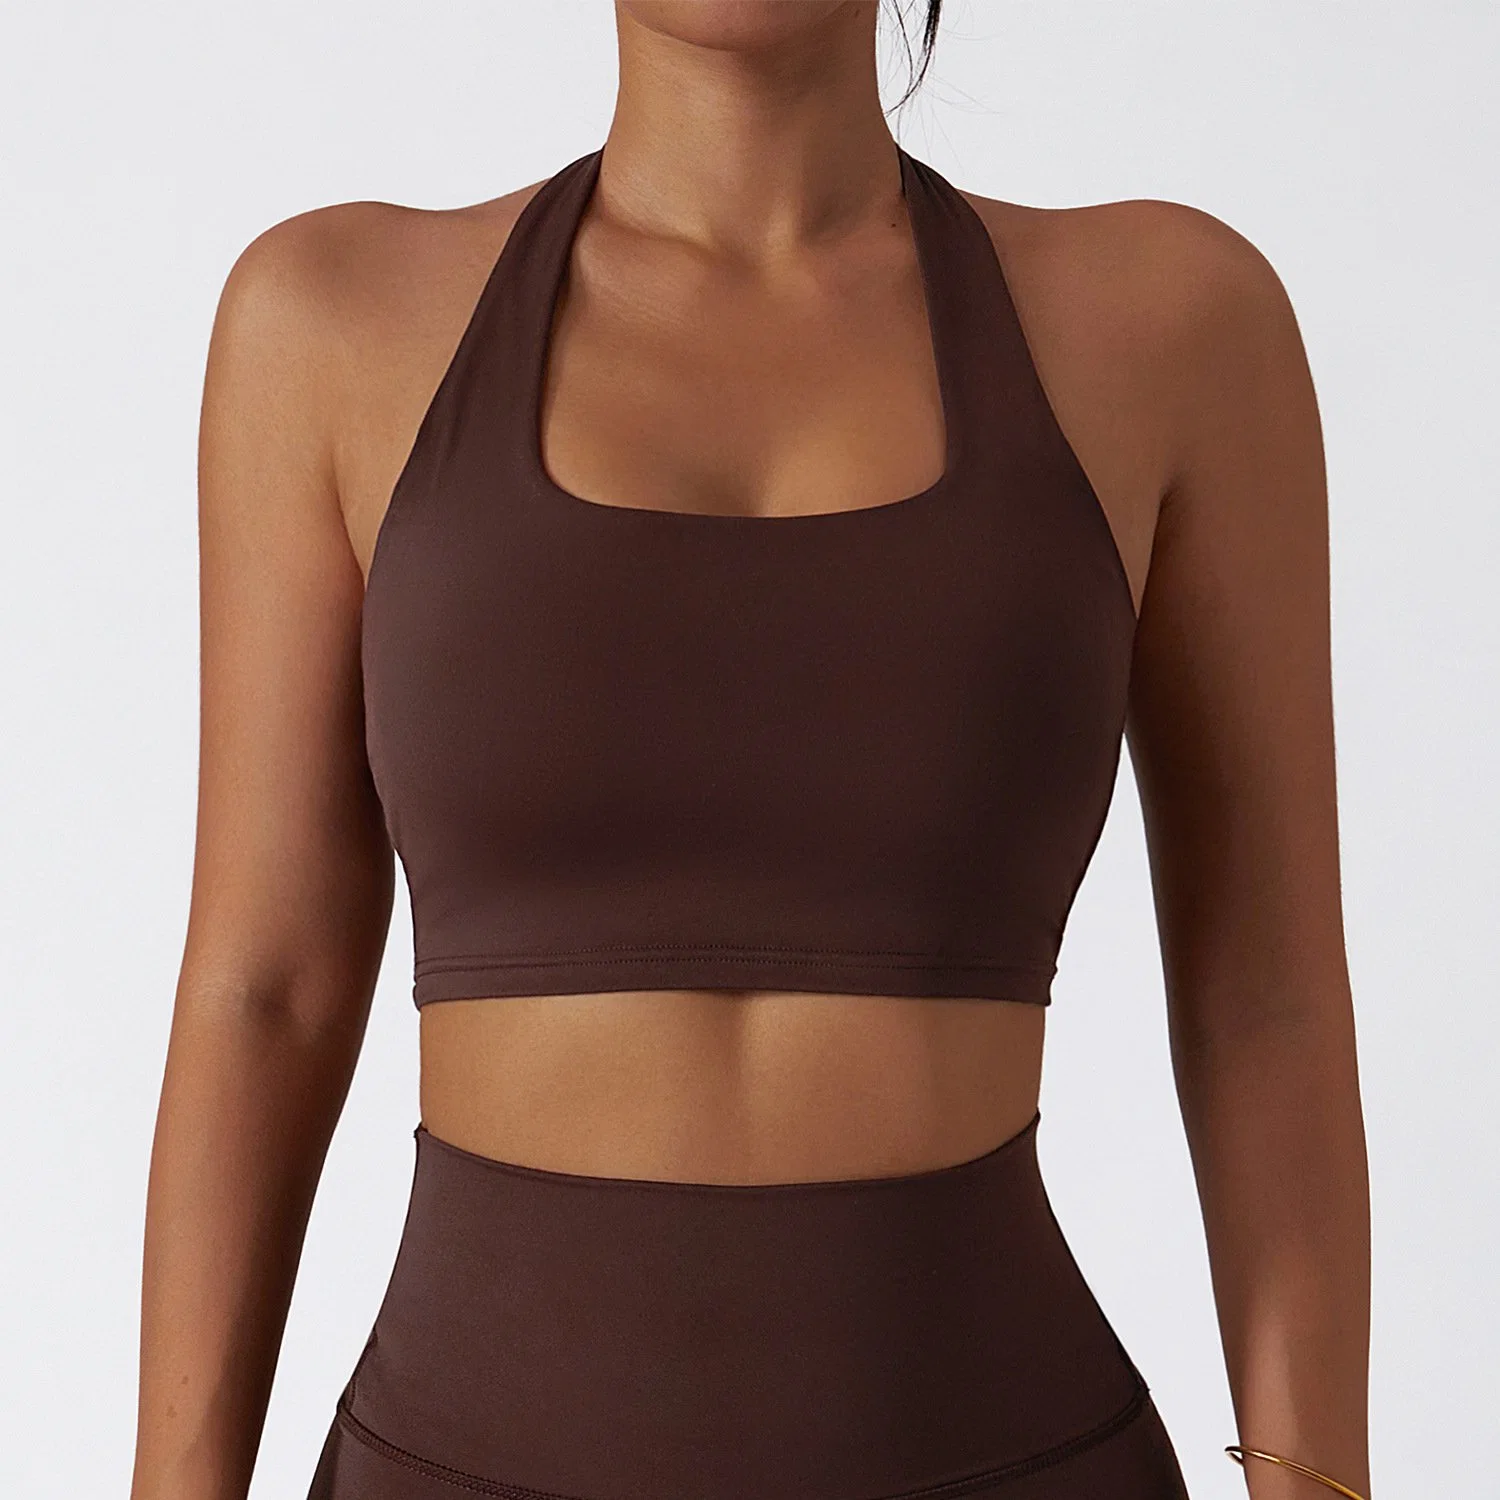 Wholesale/Supplier Yoga Bra Top, Custom Workout Fitness Women Running Gym Athletic Seamless Sport Bra